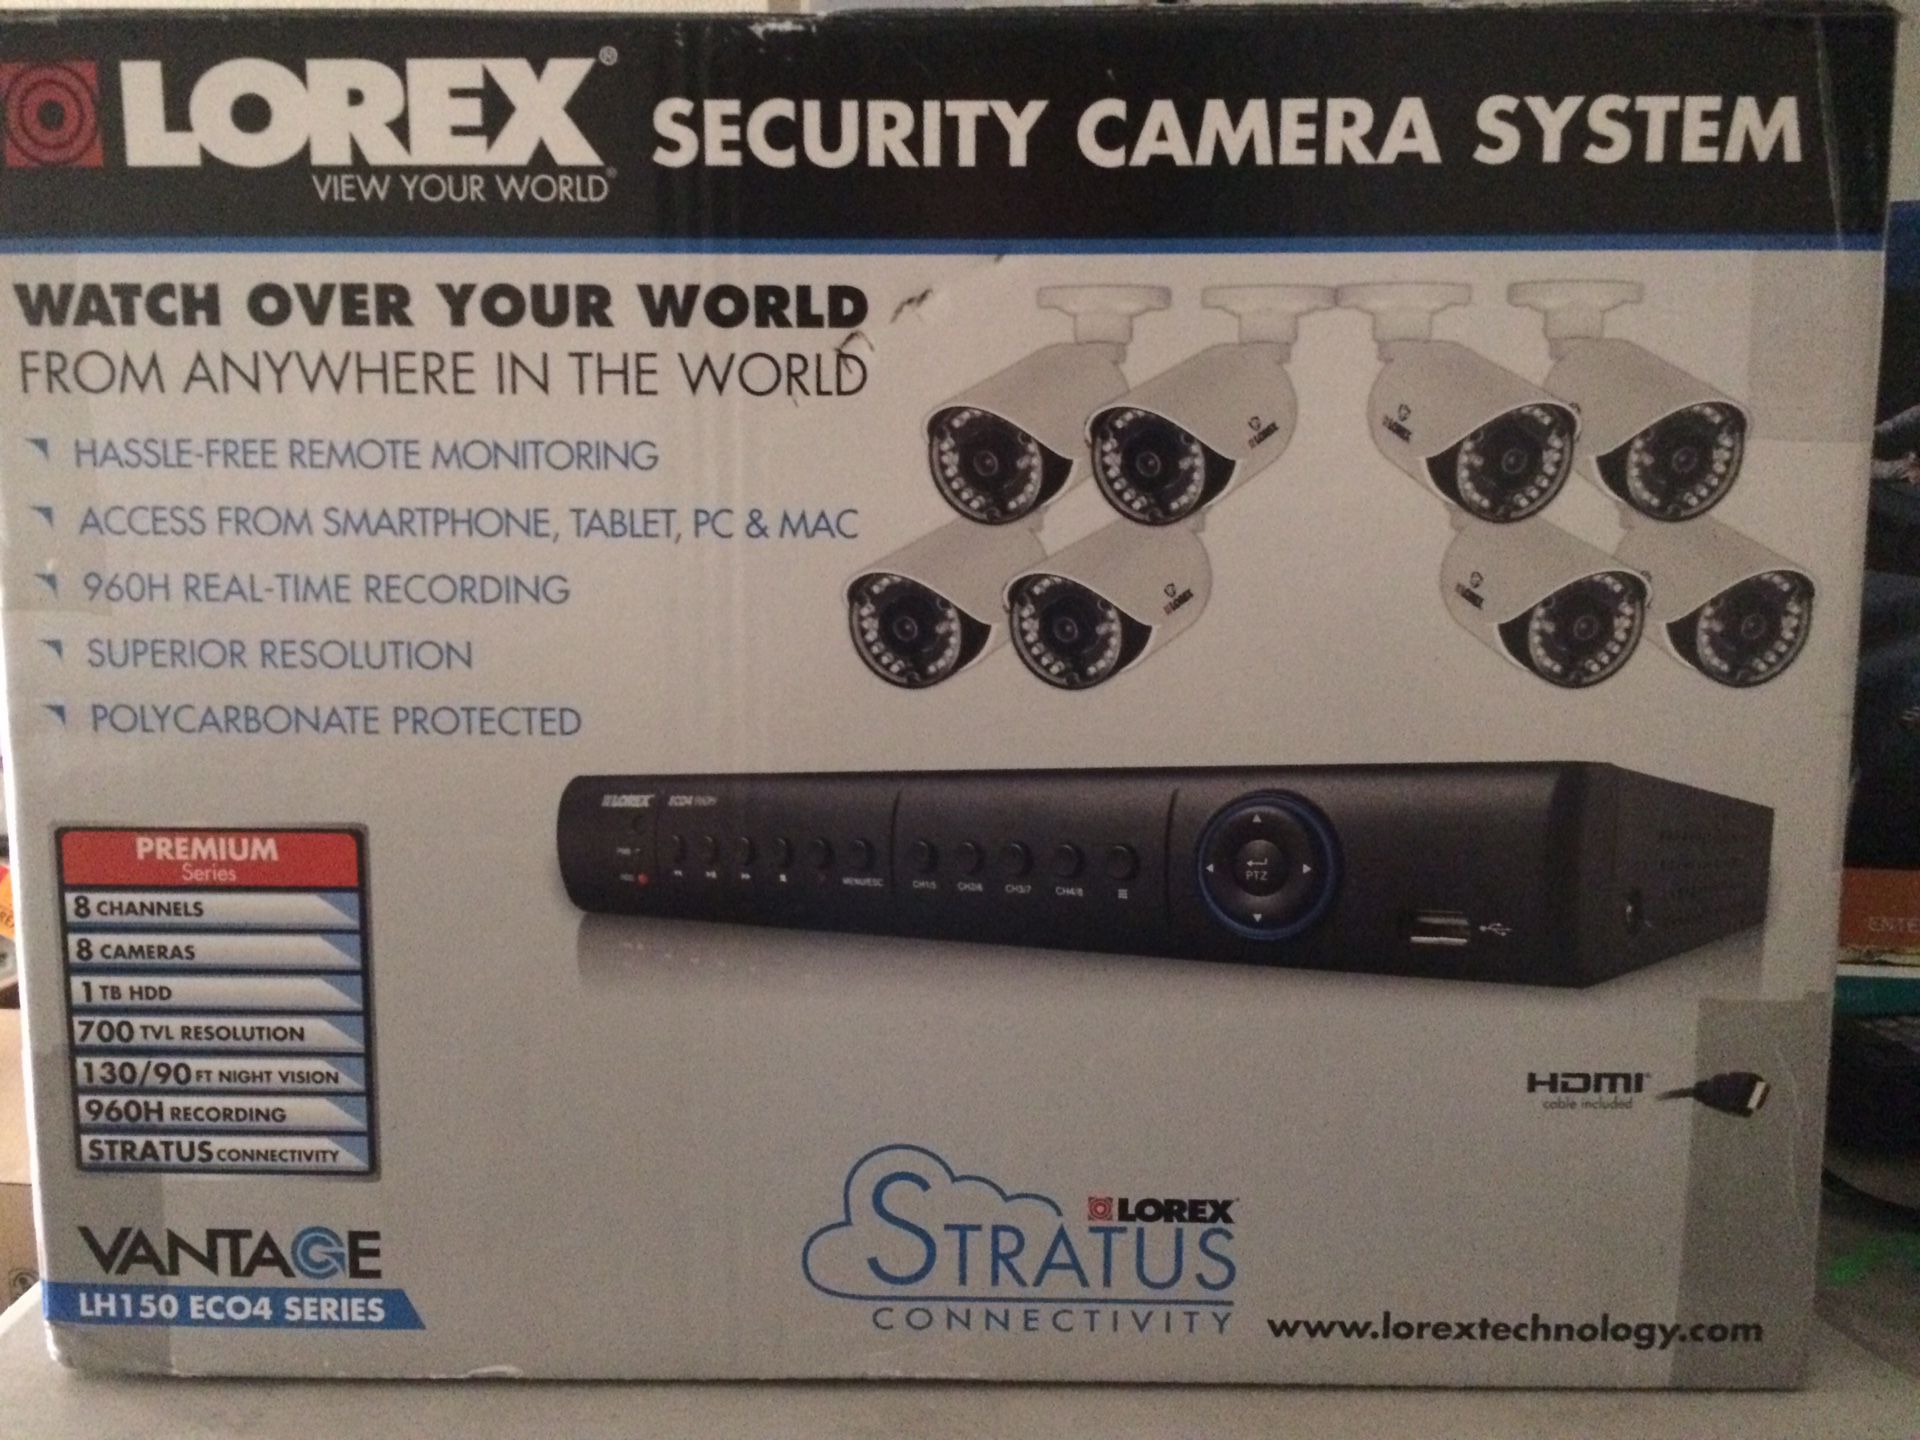 Loren Security Camera System